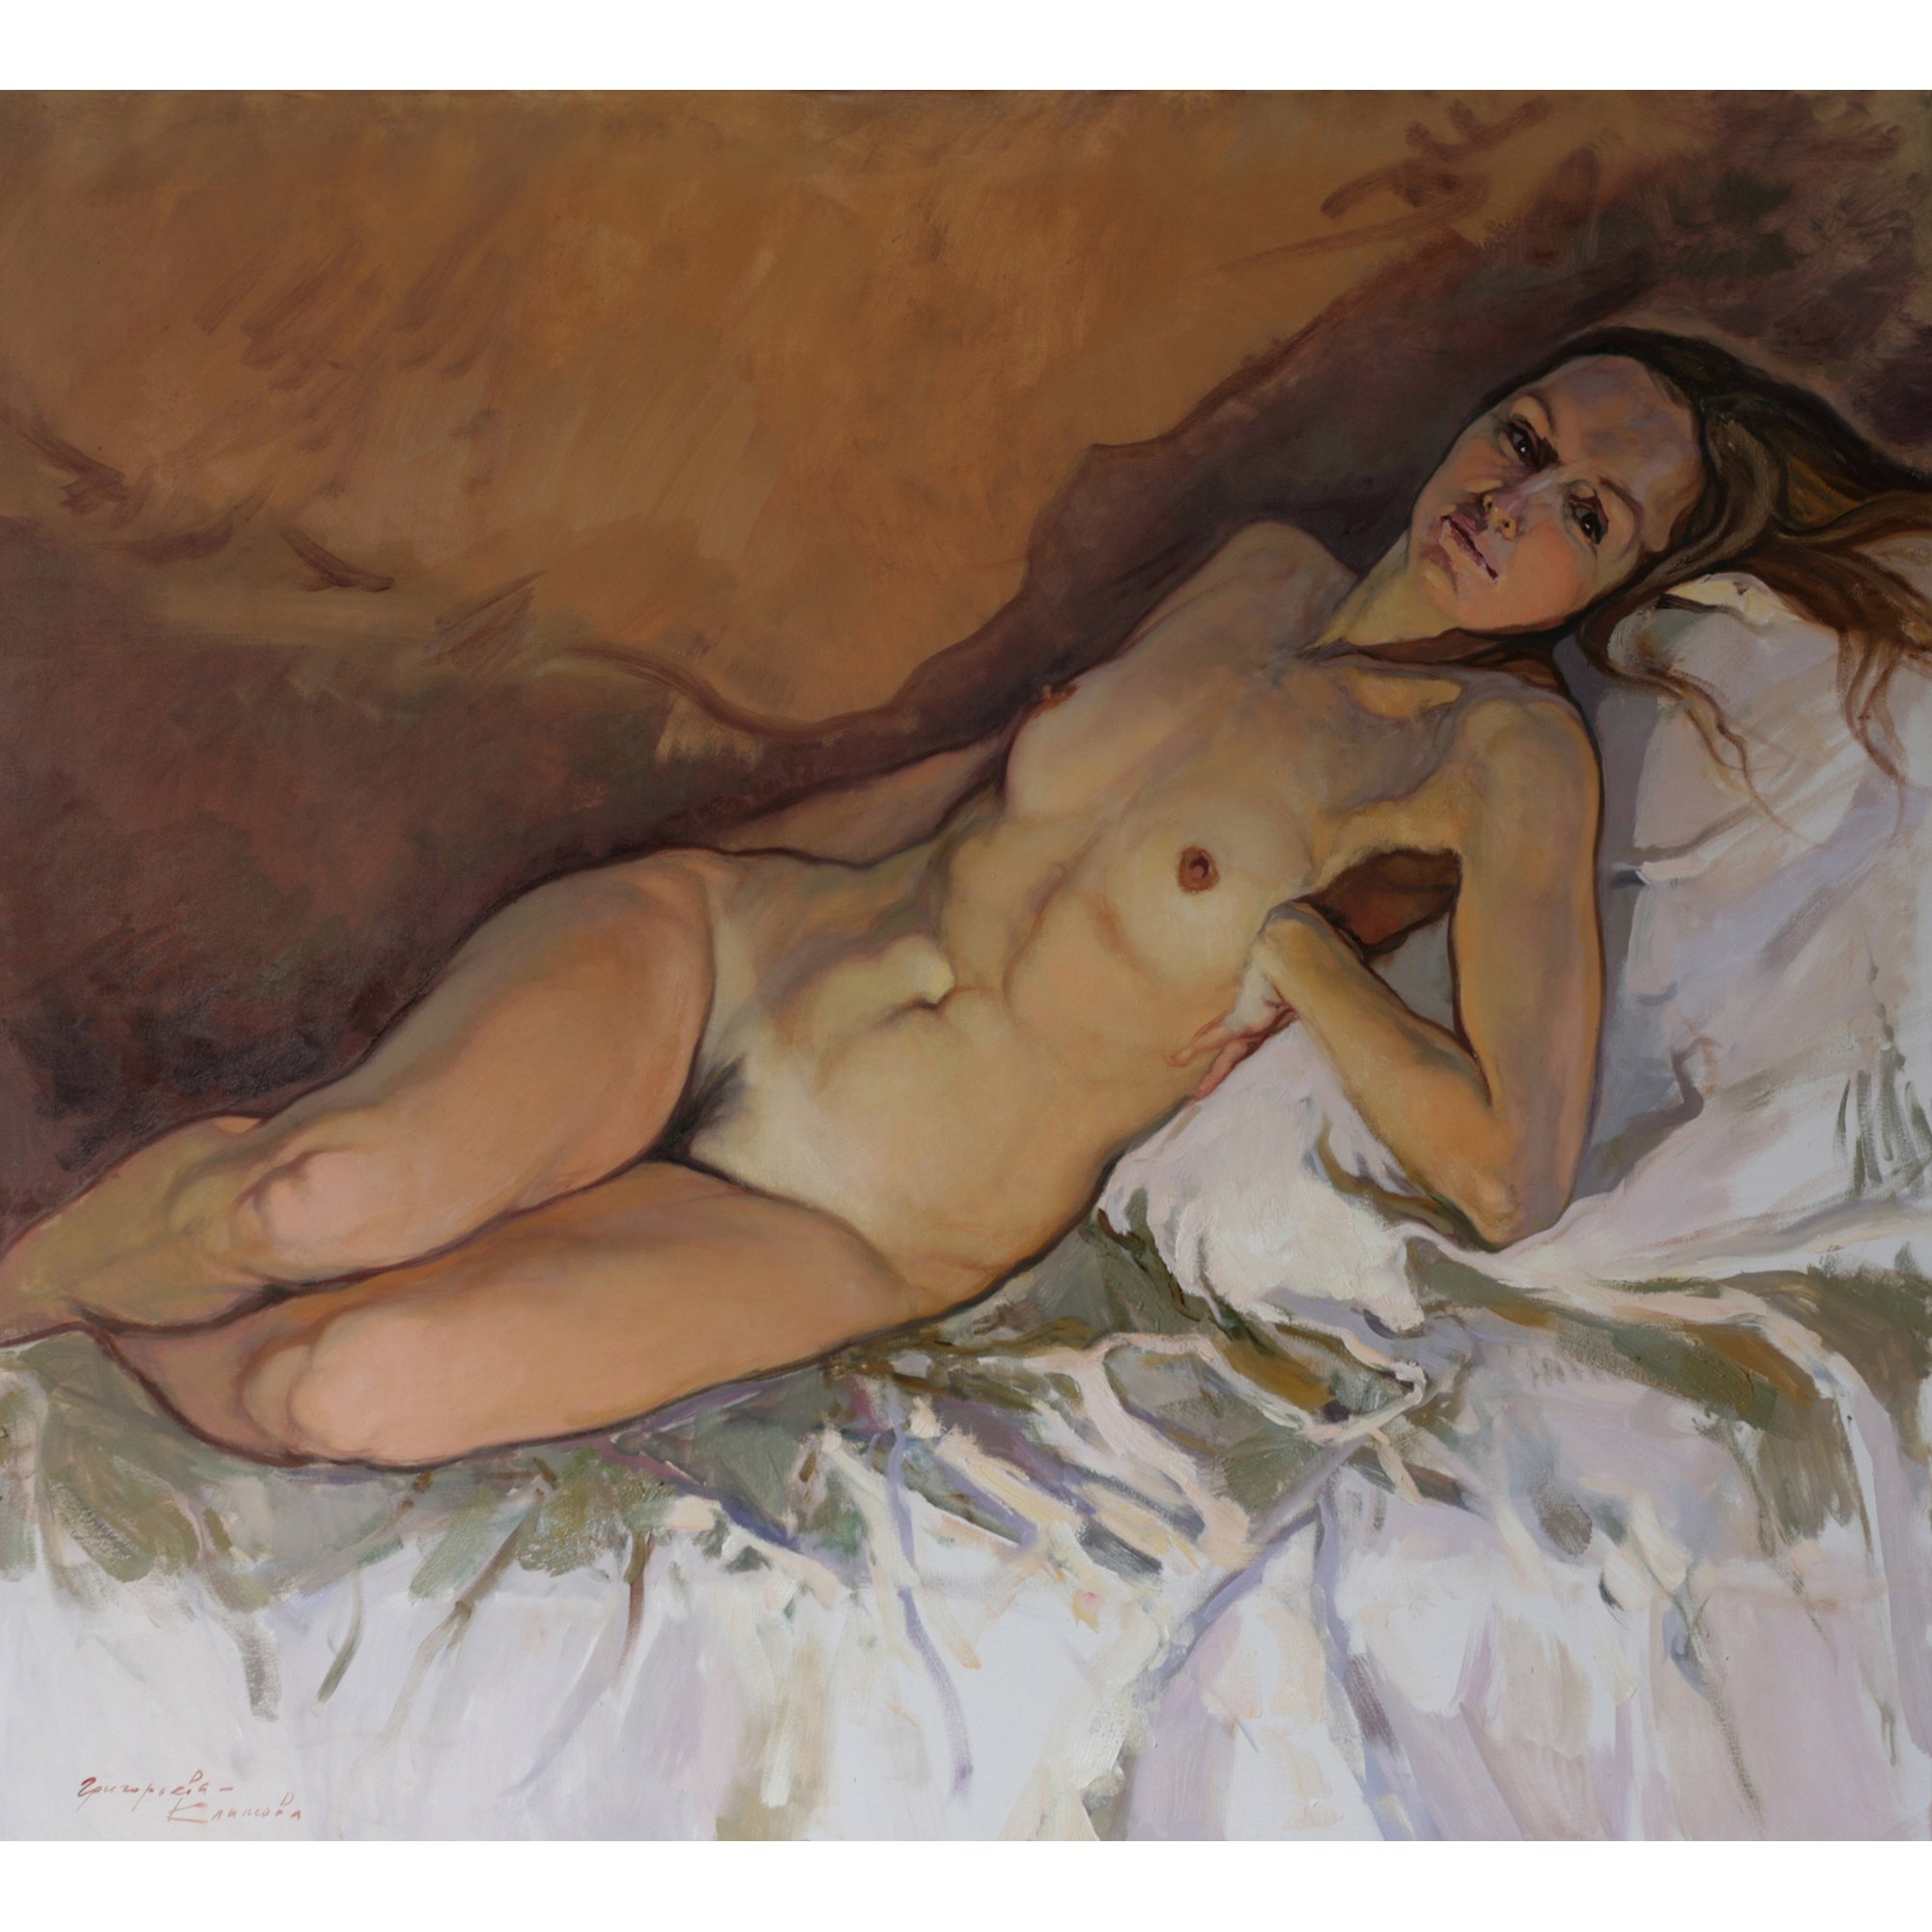 Nudity And Gender Representation In Artistic Works